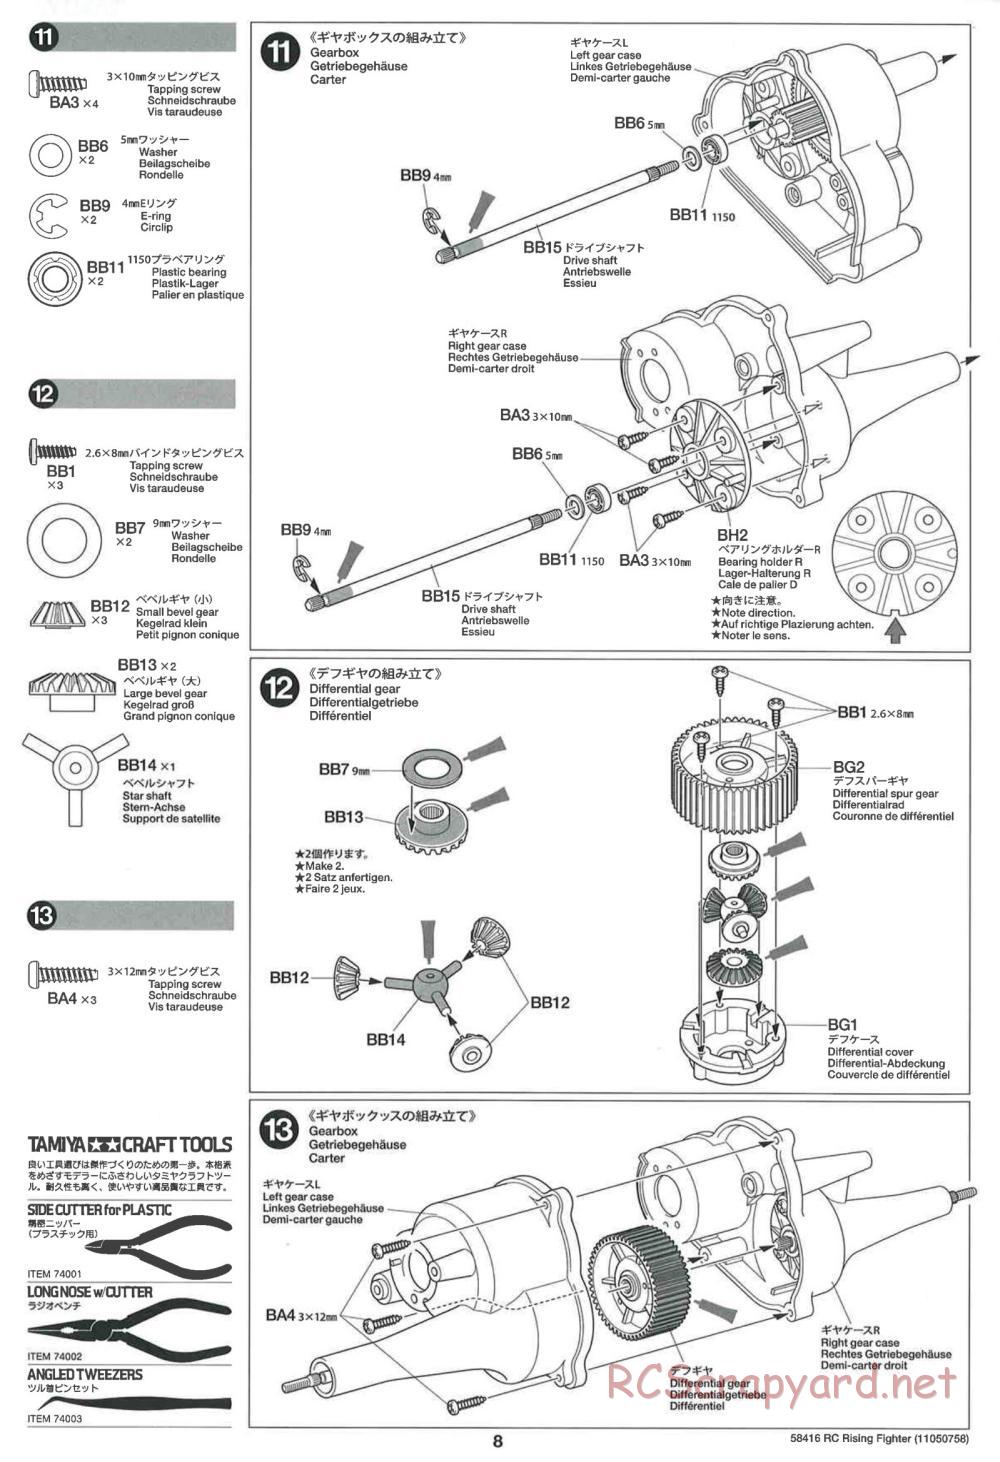 Tamiya - Rising Fighter Chassis - Manual - Page 8